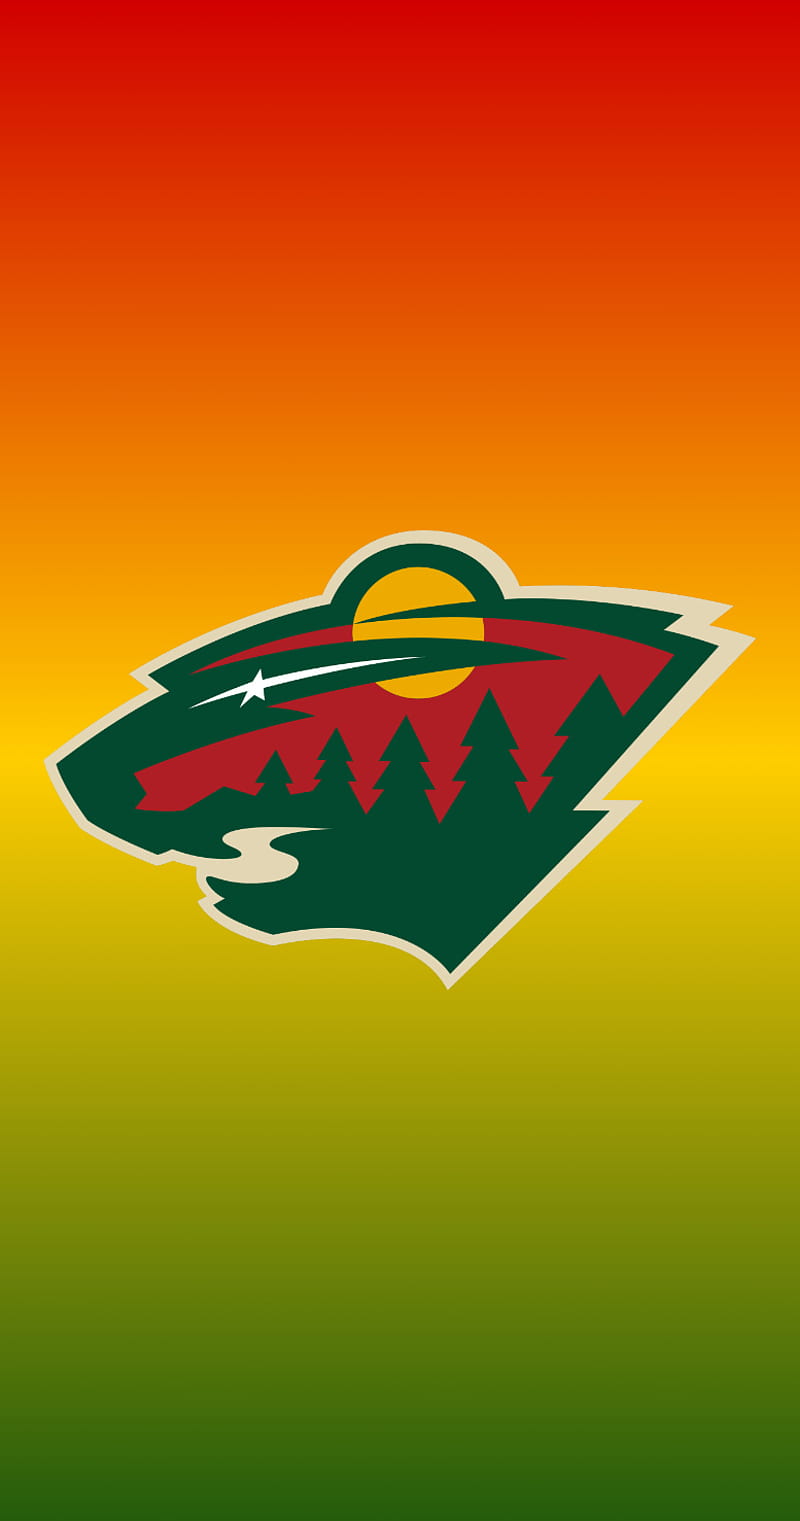 Minnesota Wild (NHL) iPhone 6/7/8 Lock Screen Christmas Ug…